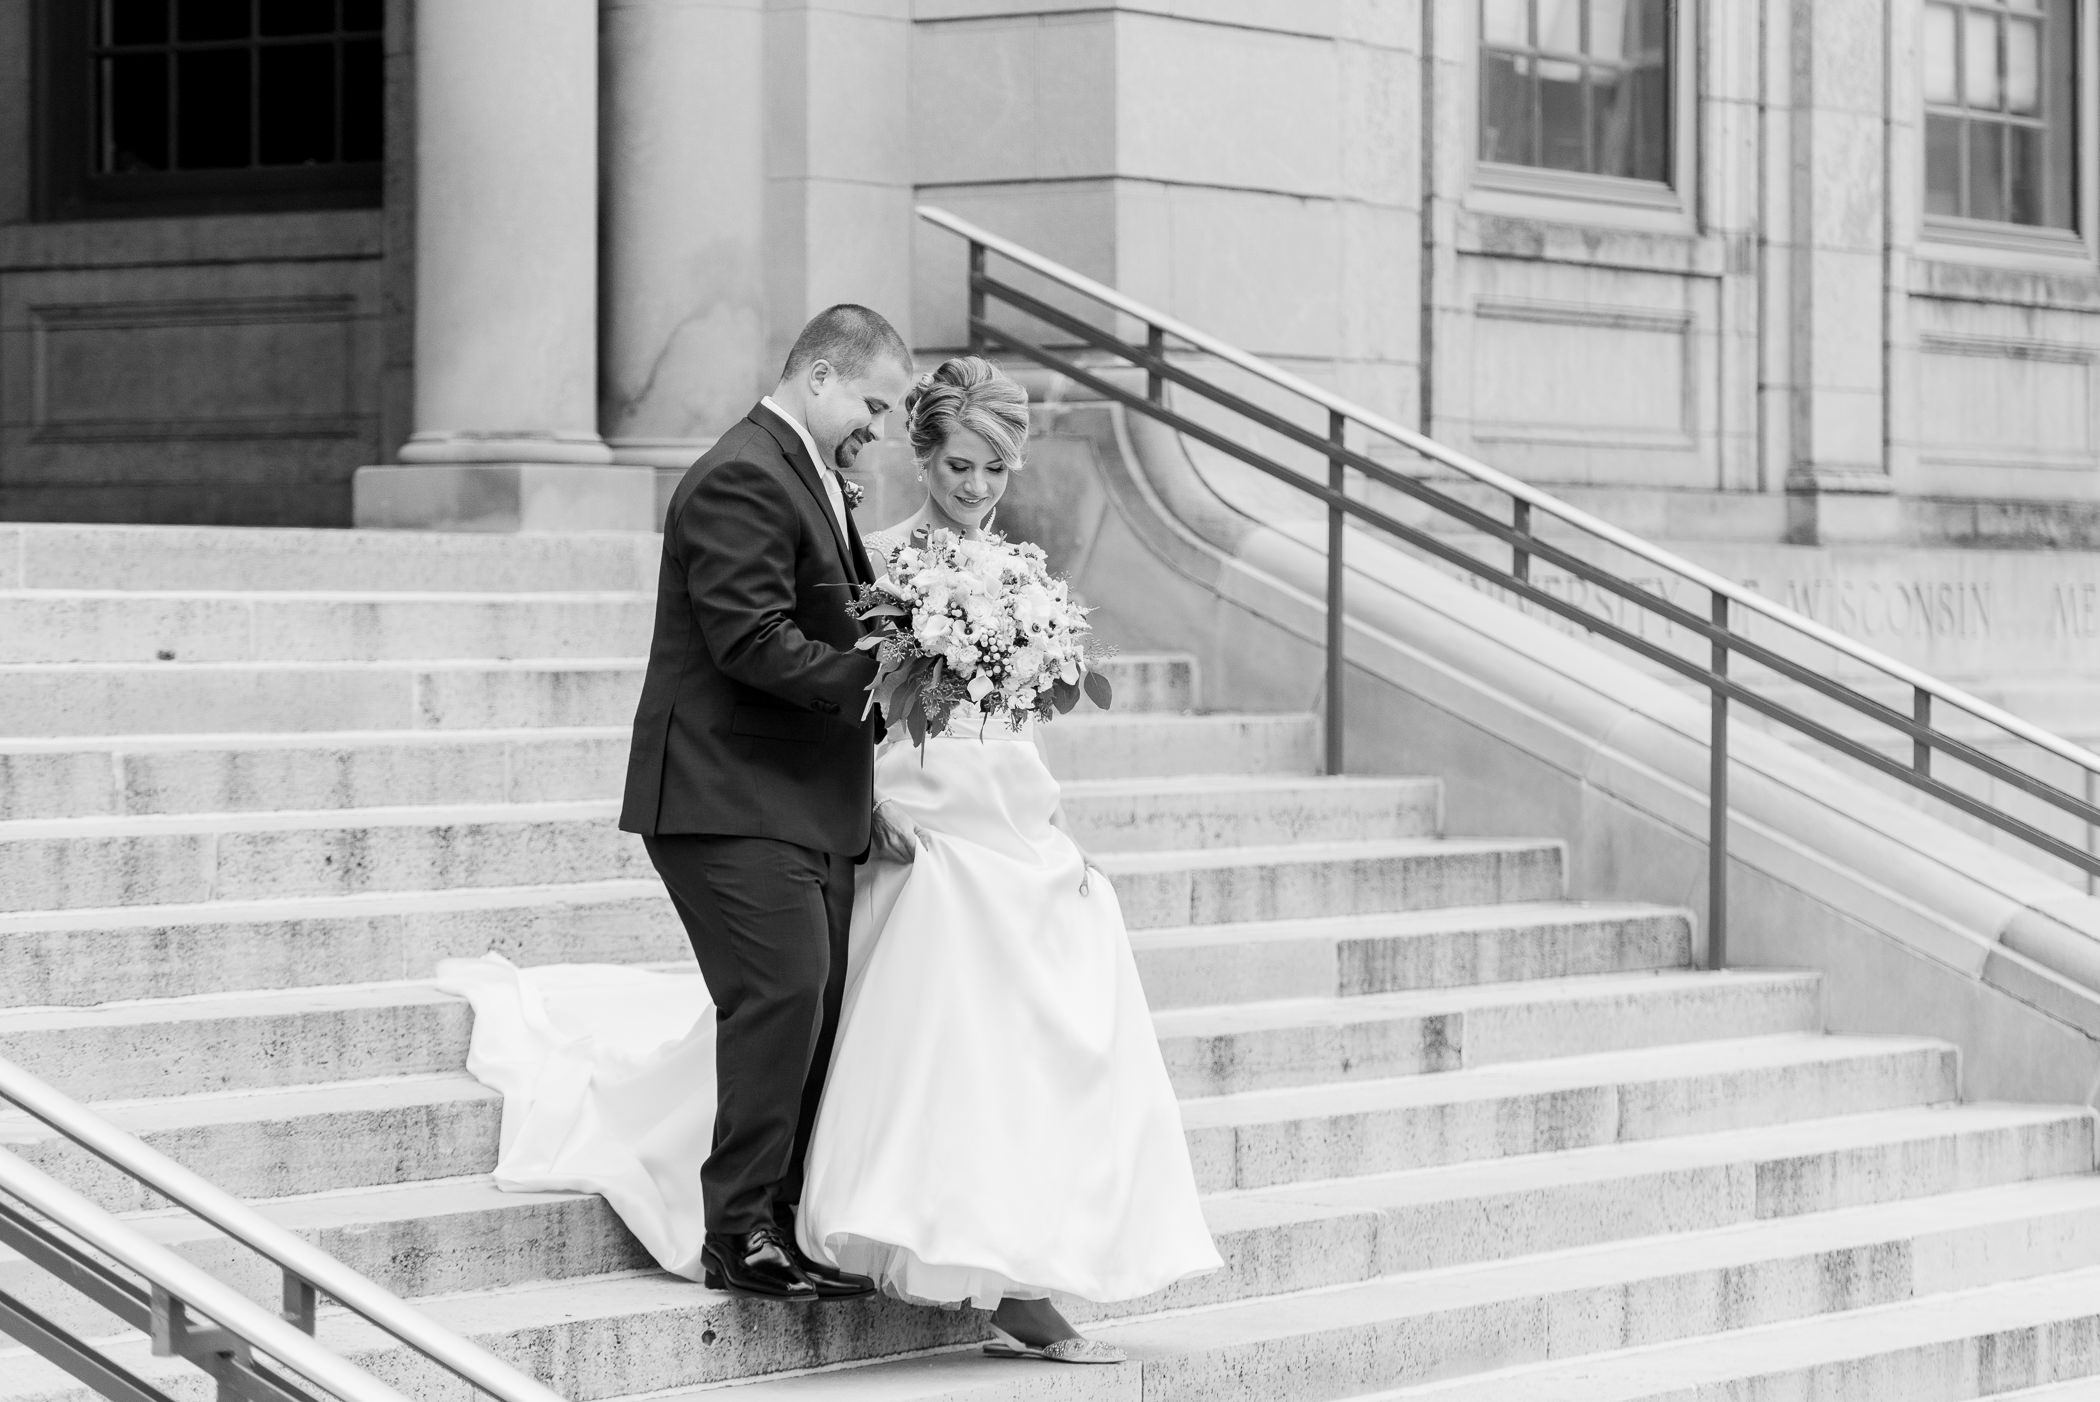 Memorial Union Madison, WI Wedding Photographers - Larissa Marie Photography